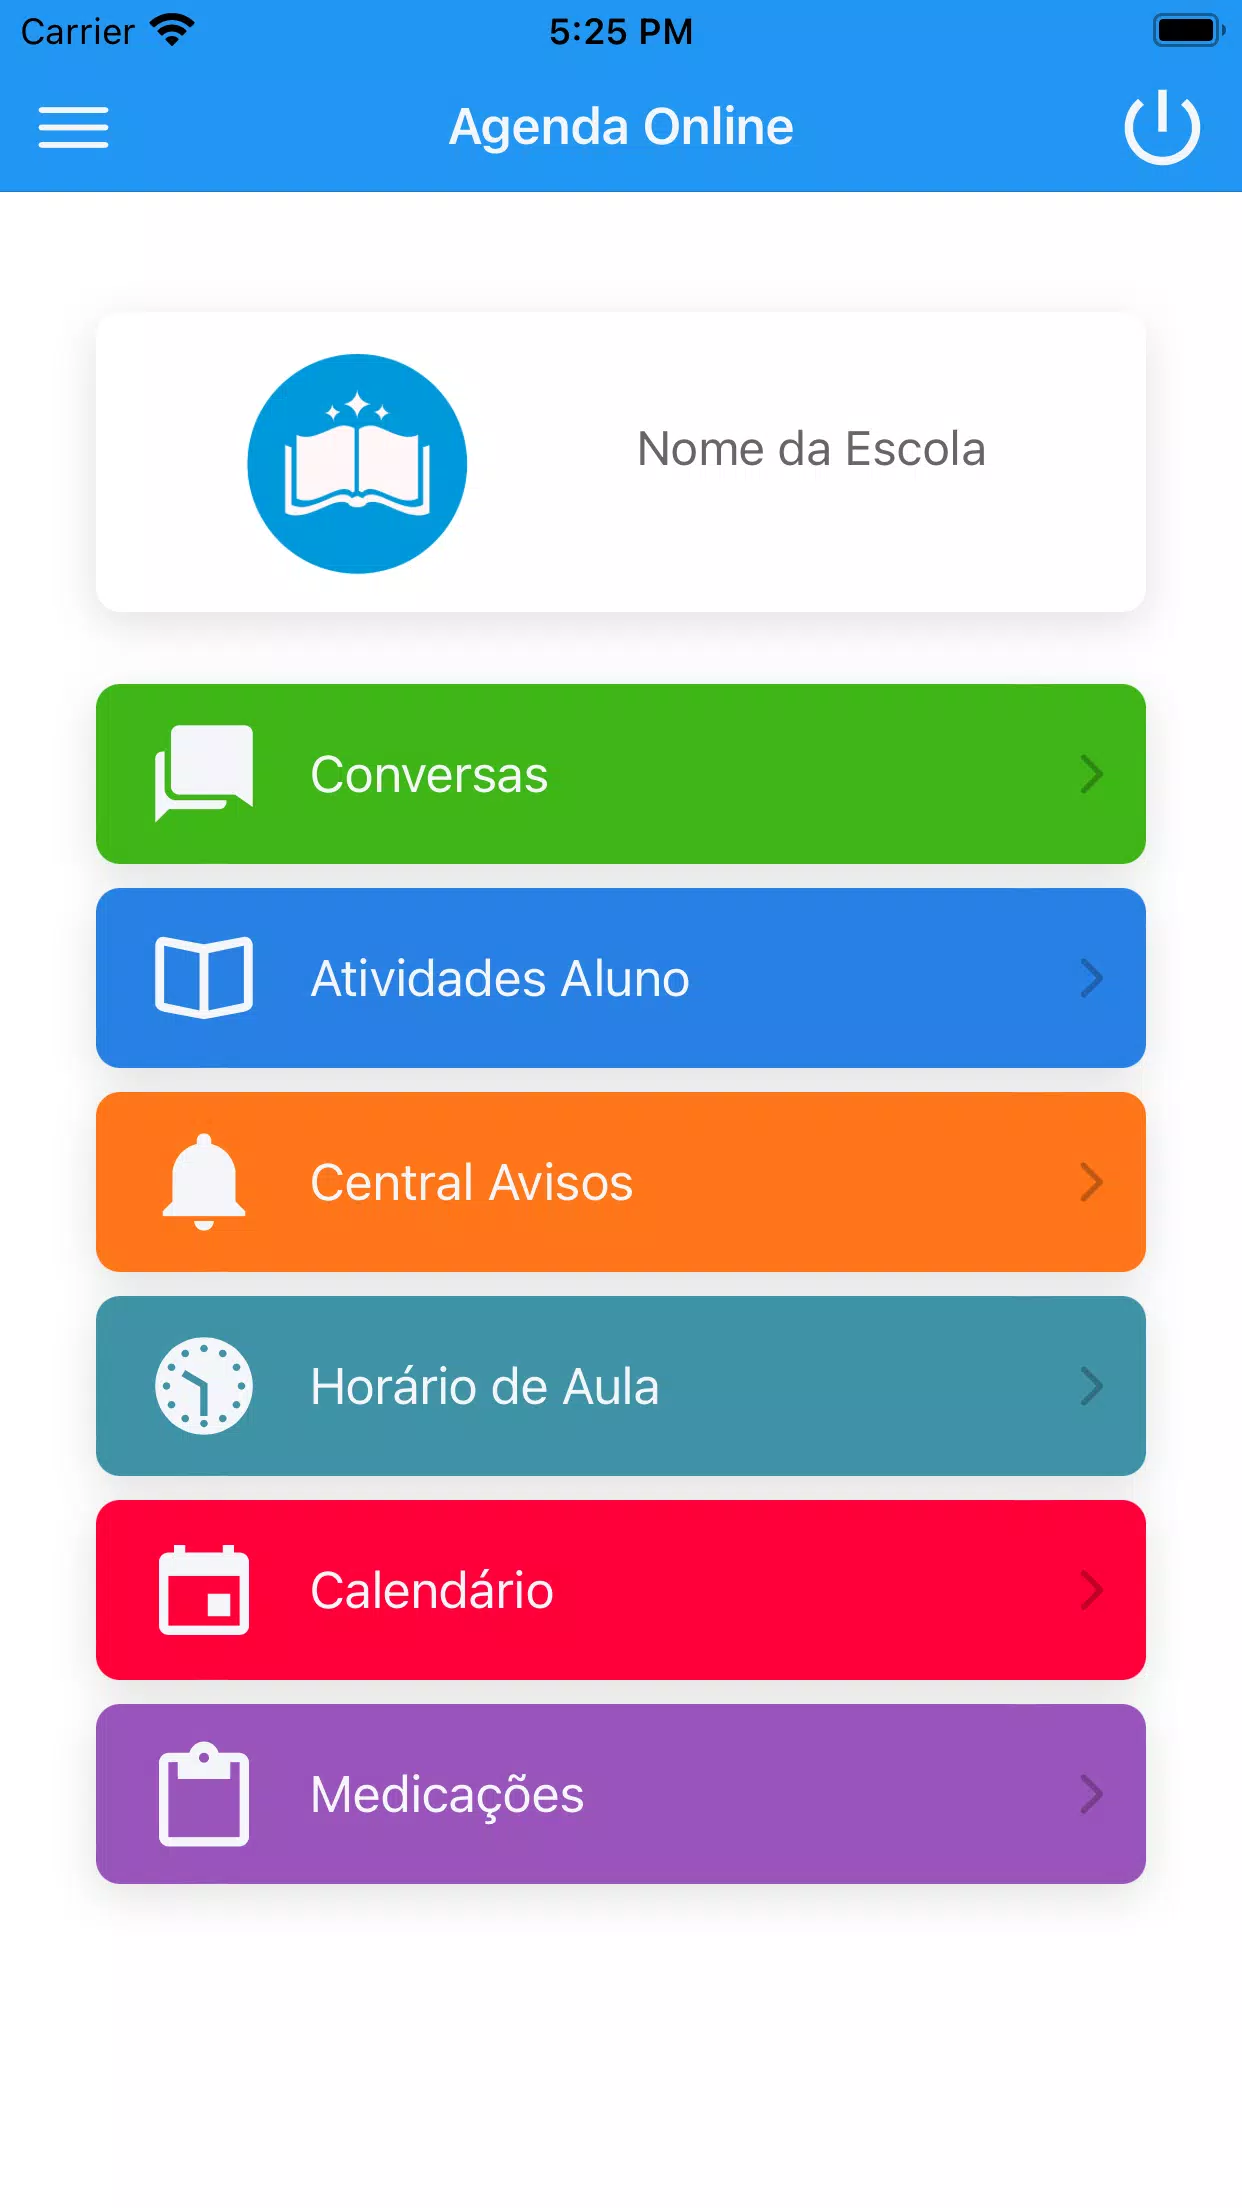 Agenda Online (Escola) for Android - APK Download